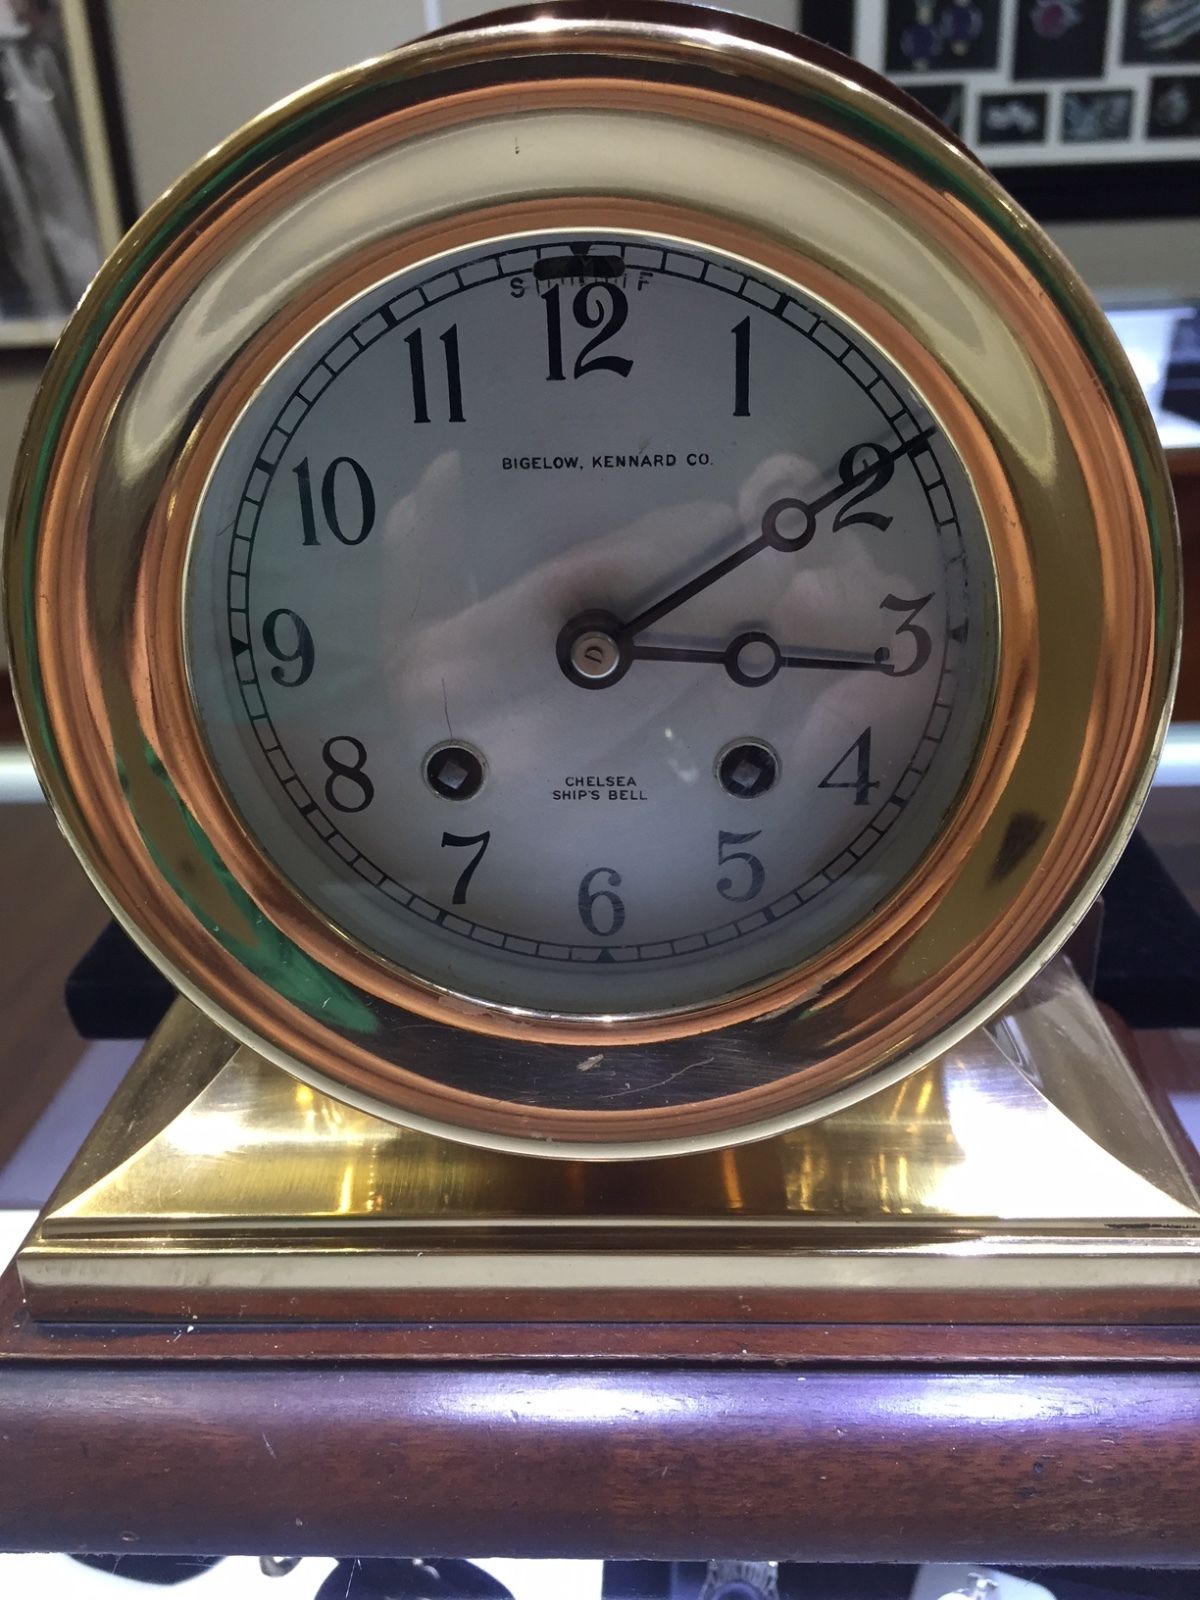 CHELSEA COMMANDER SHIPS BELL CLOCK MAHOGANY CIRCA 1910 - 1914 PRESENTATION